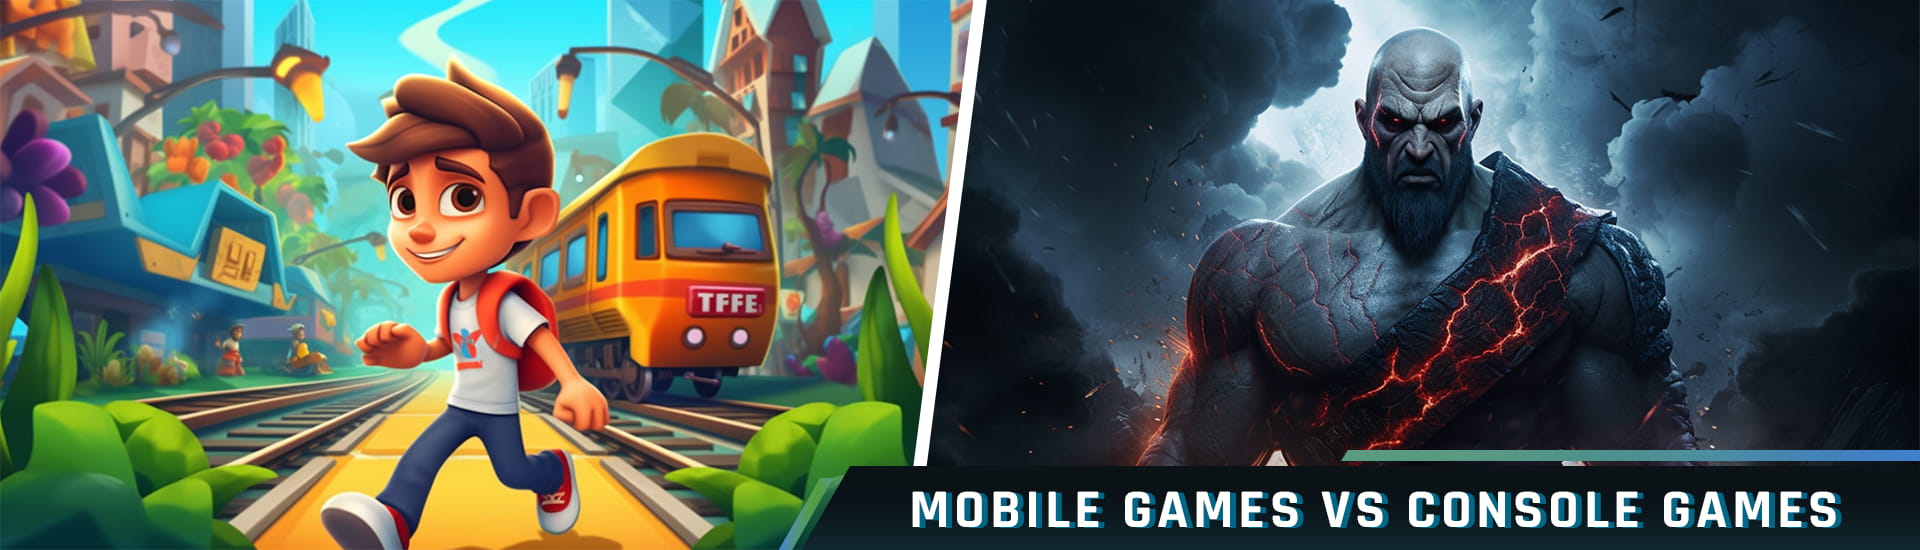 mobile games vs console games